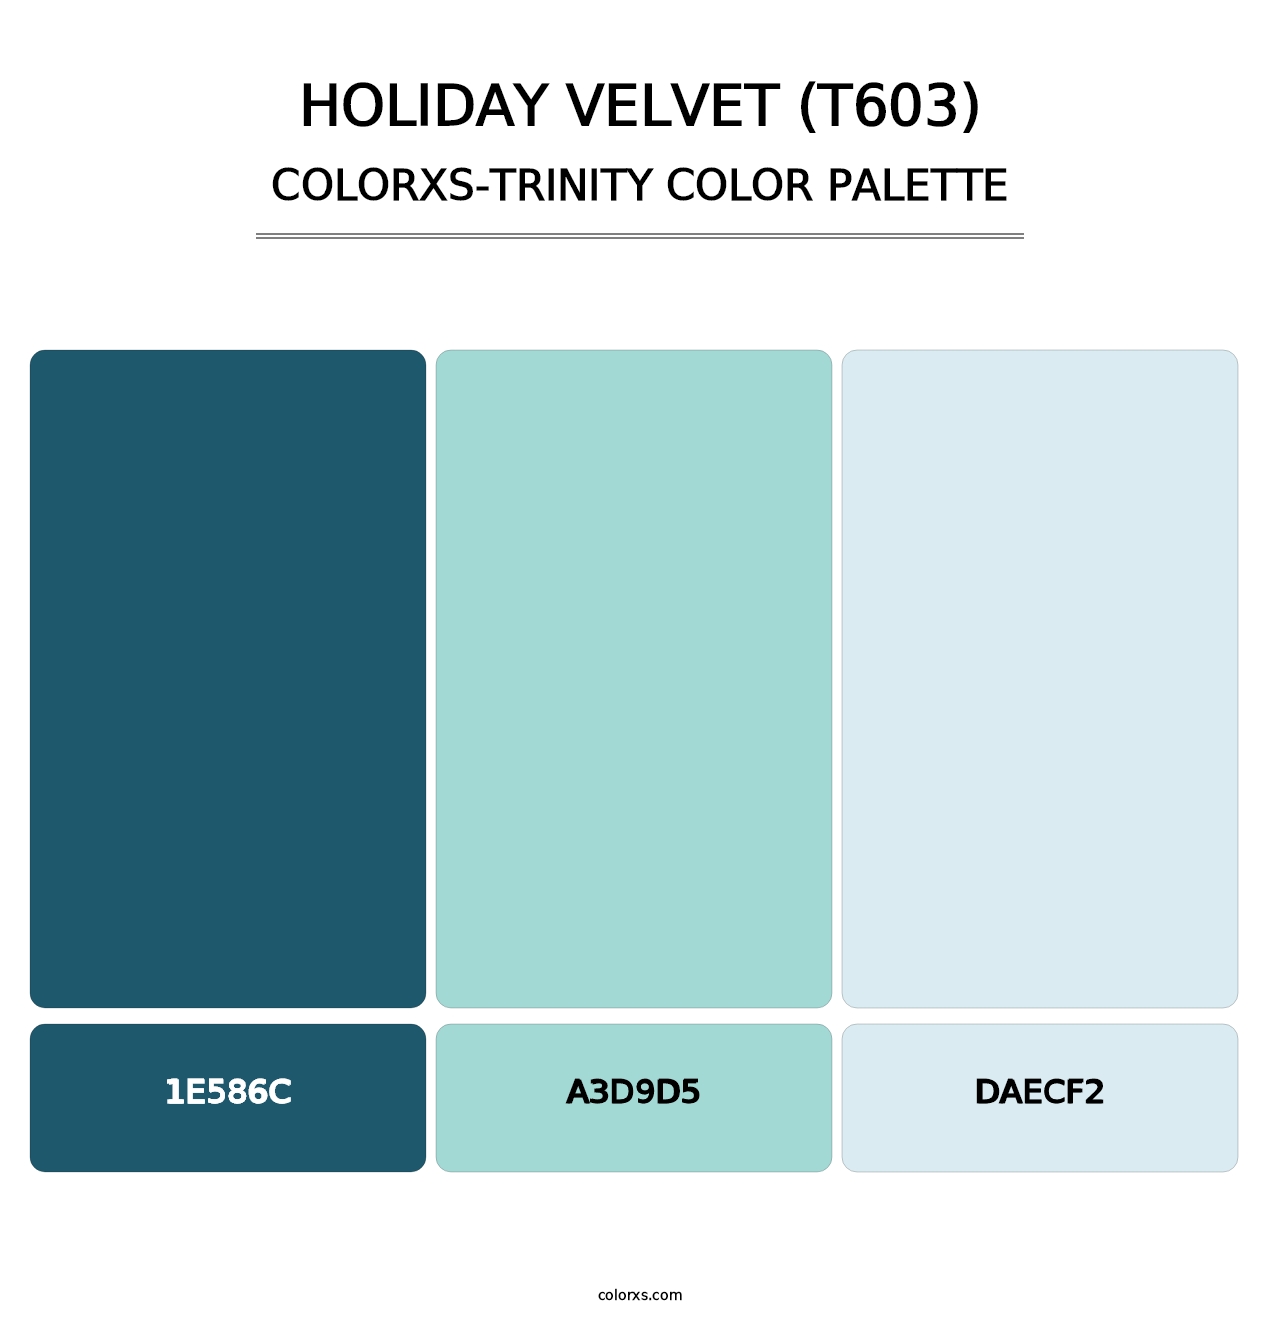 Holiday Velvet (T603) - Colorxs Trinity Palette